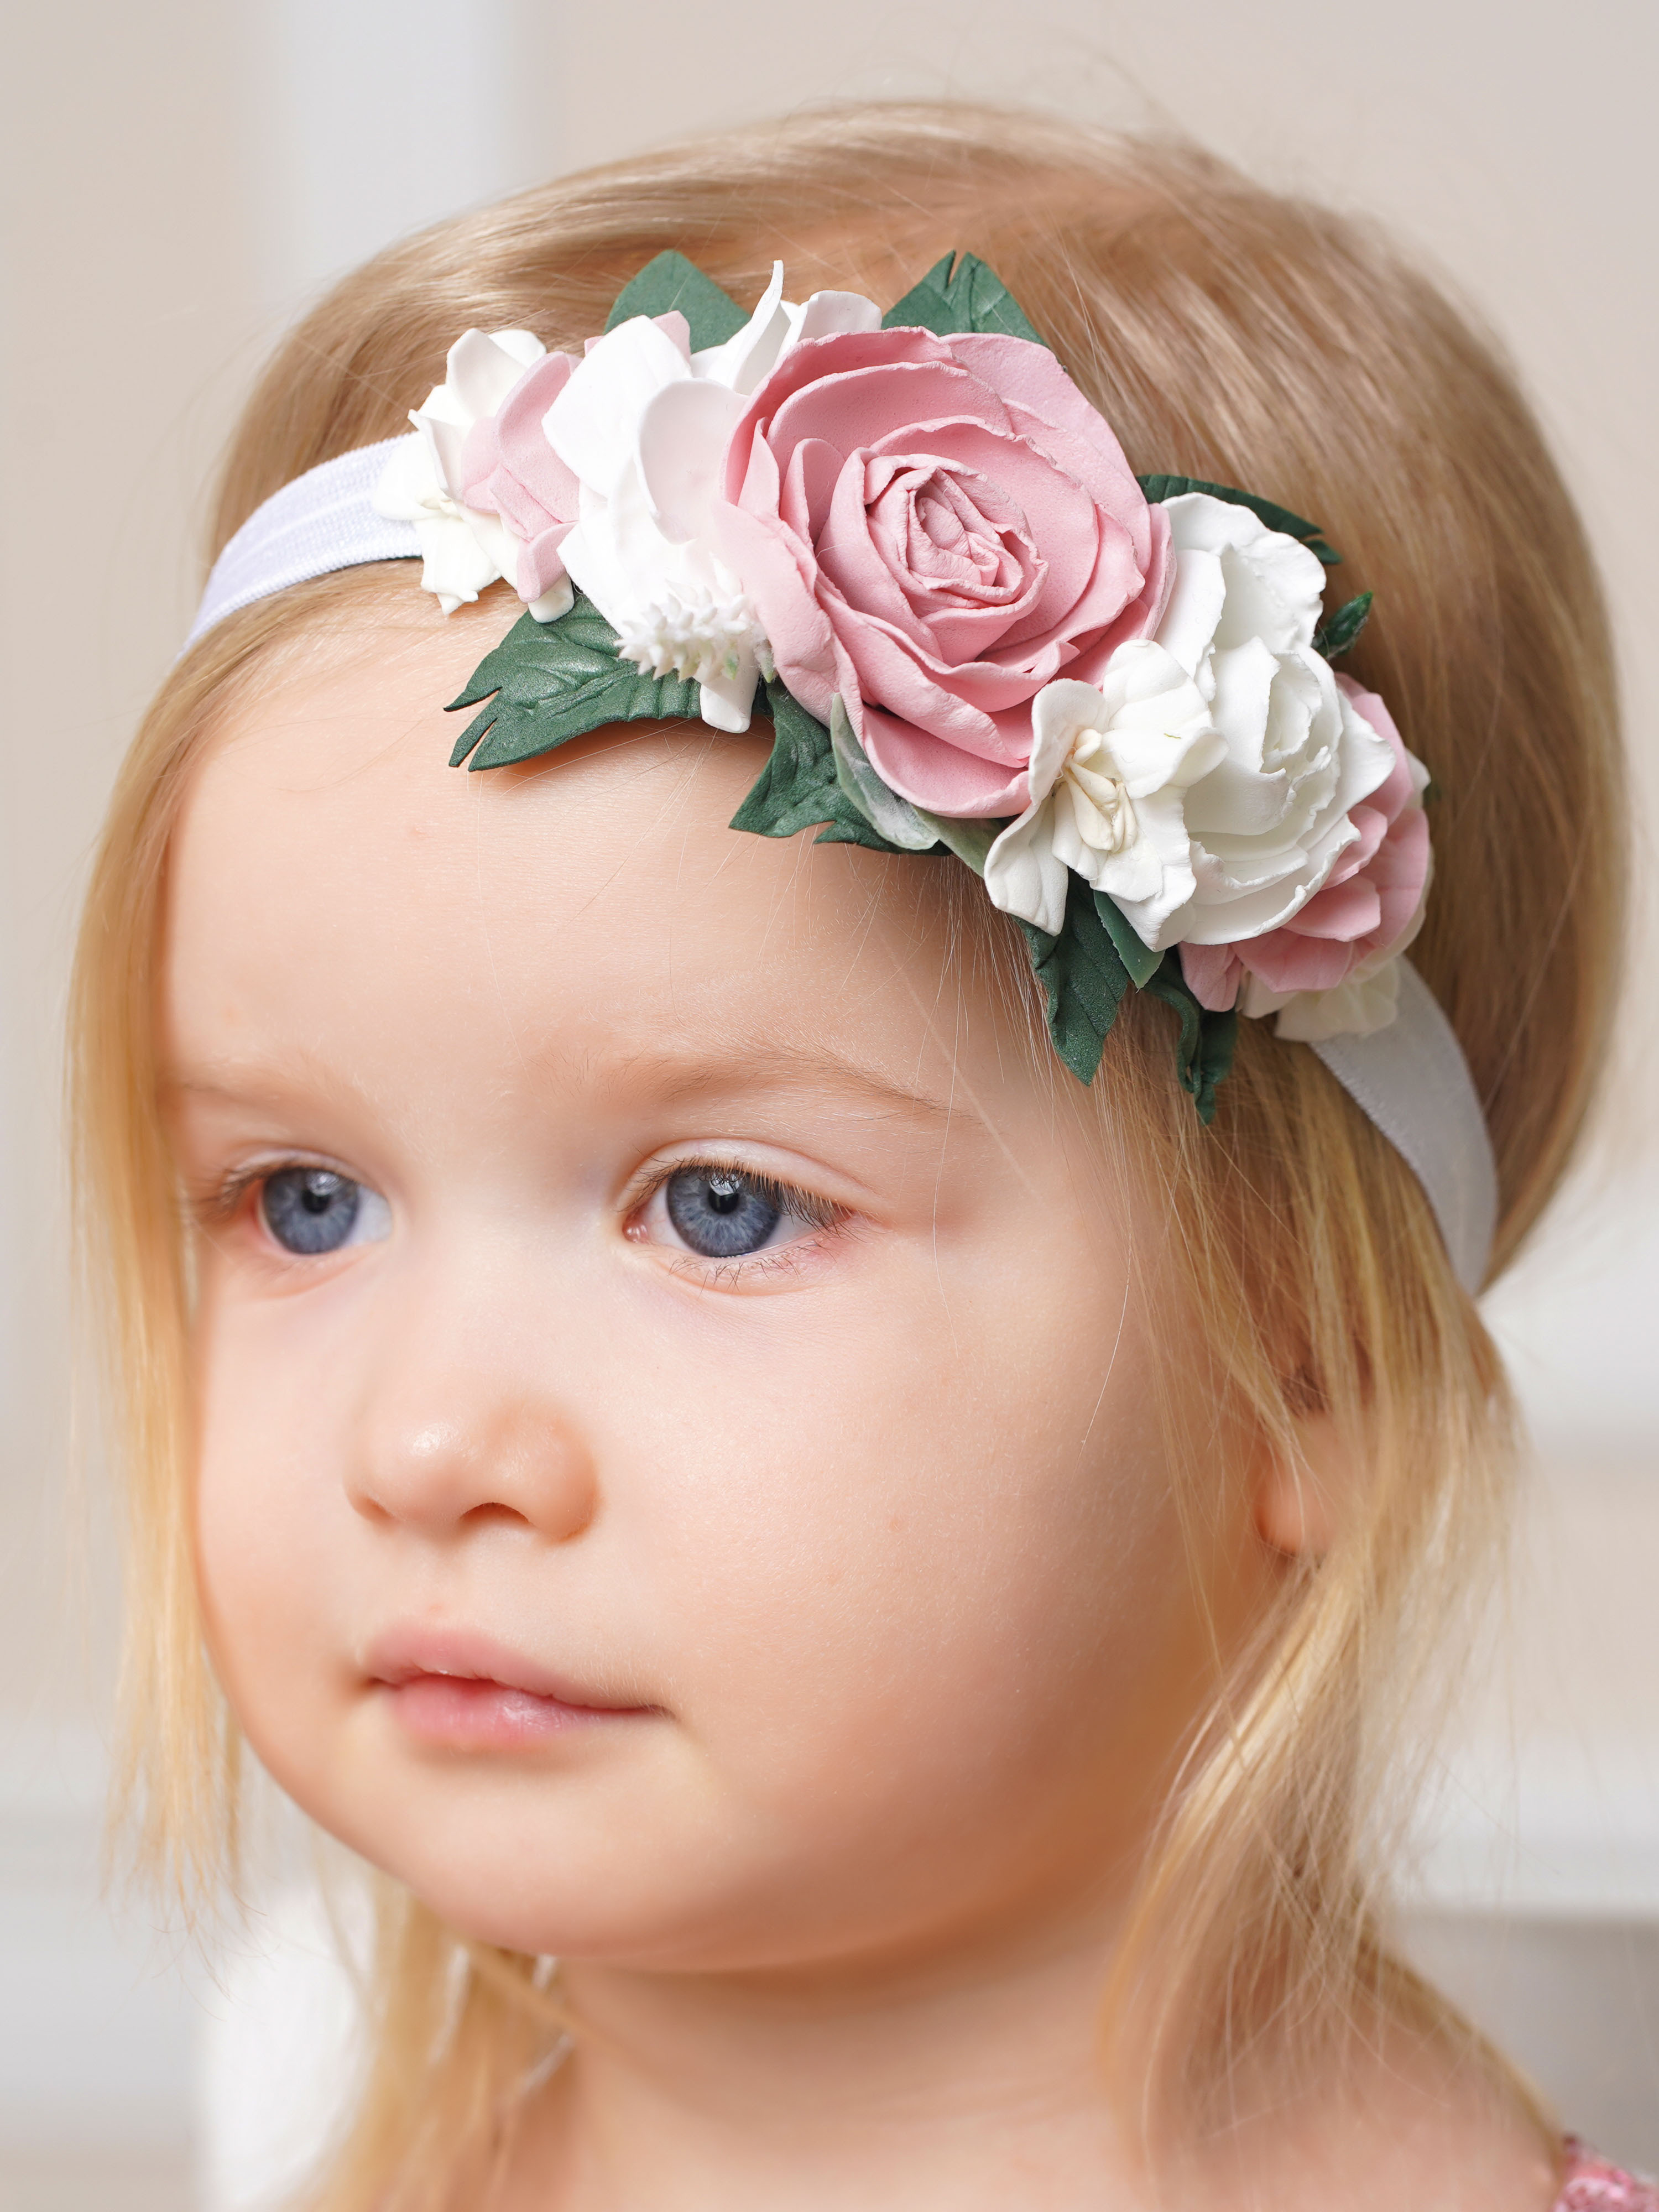 Цветок на голову ребенку. Повязка на голову цветок. Детская повязка с цветочком. Ободок из картона на голову для ребенка.